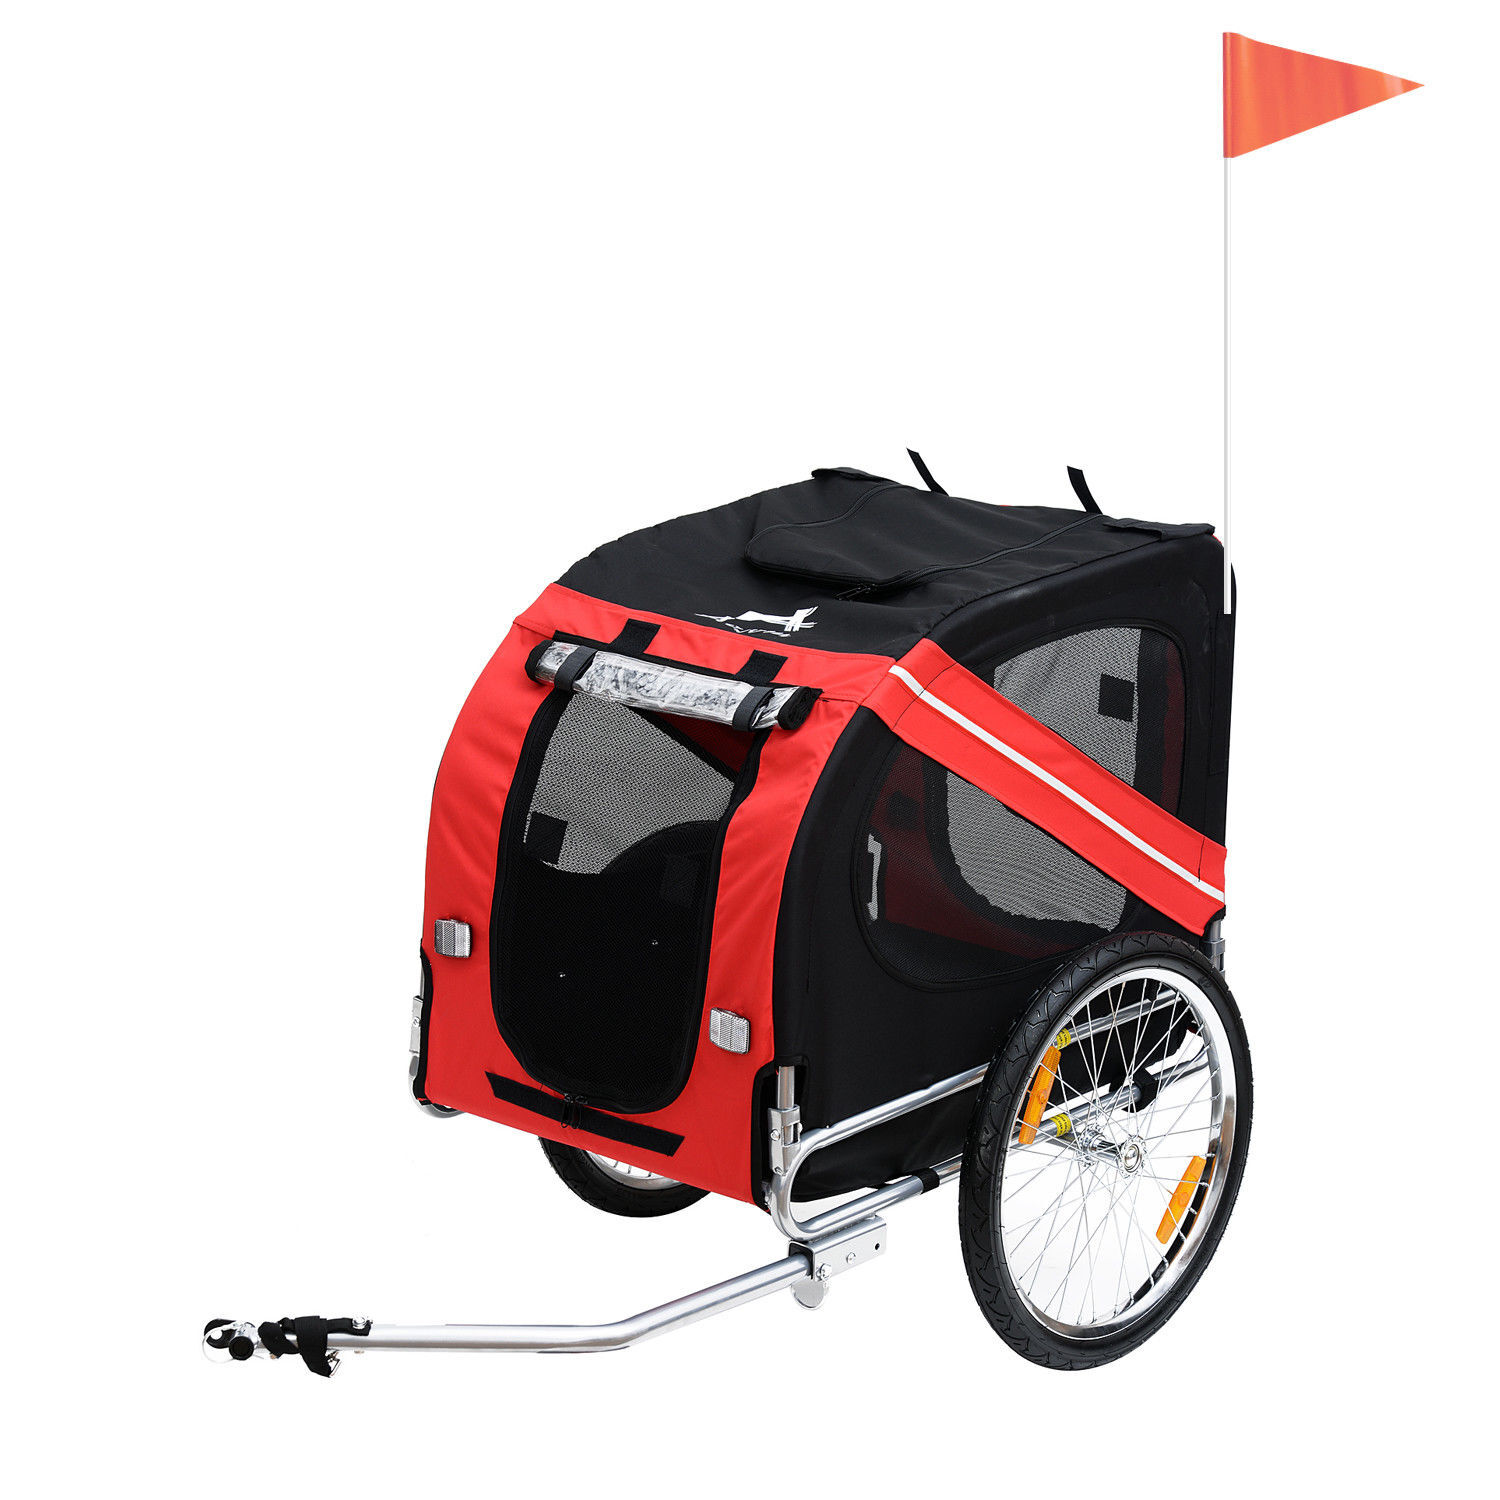 PawHut Folding Dog Bike Trailer, Pet Carrier Bicycle Trailer with Steel Frame Stroller, Red & Black